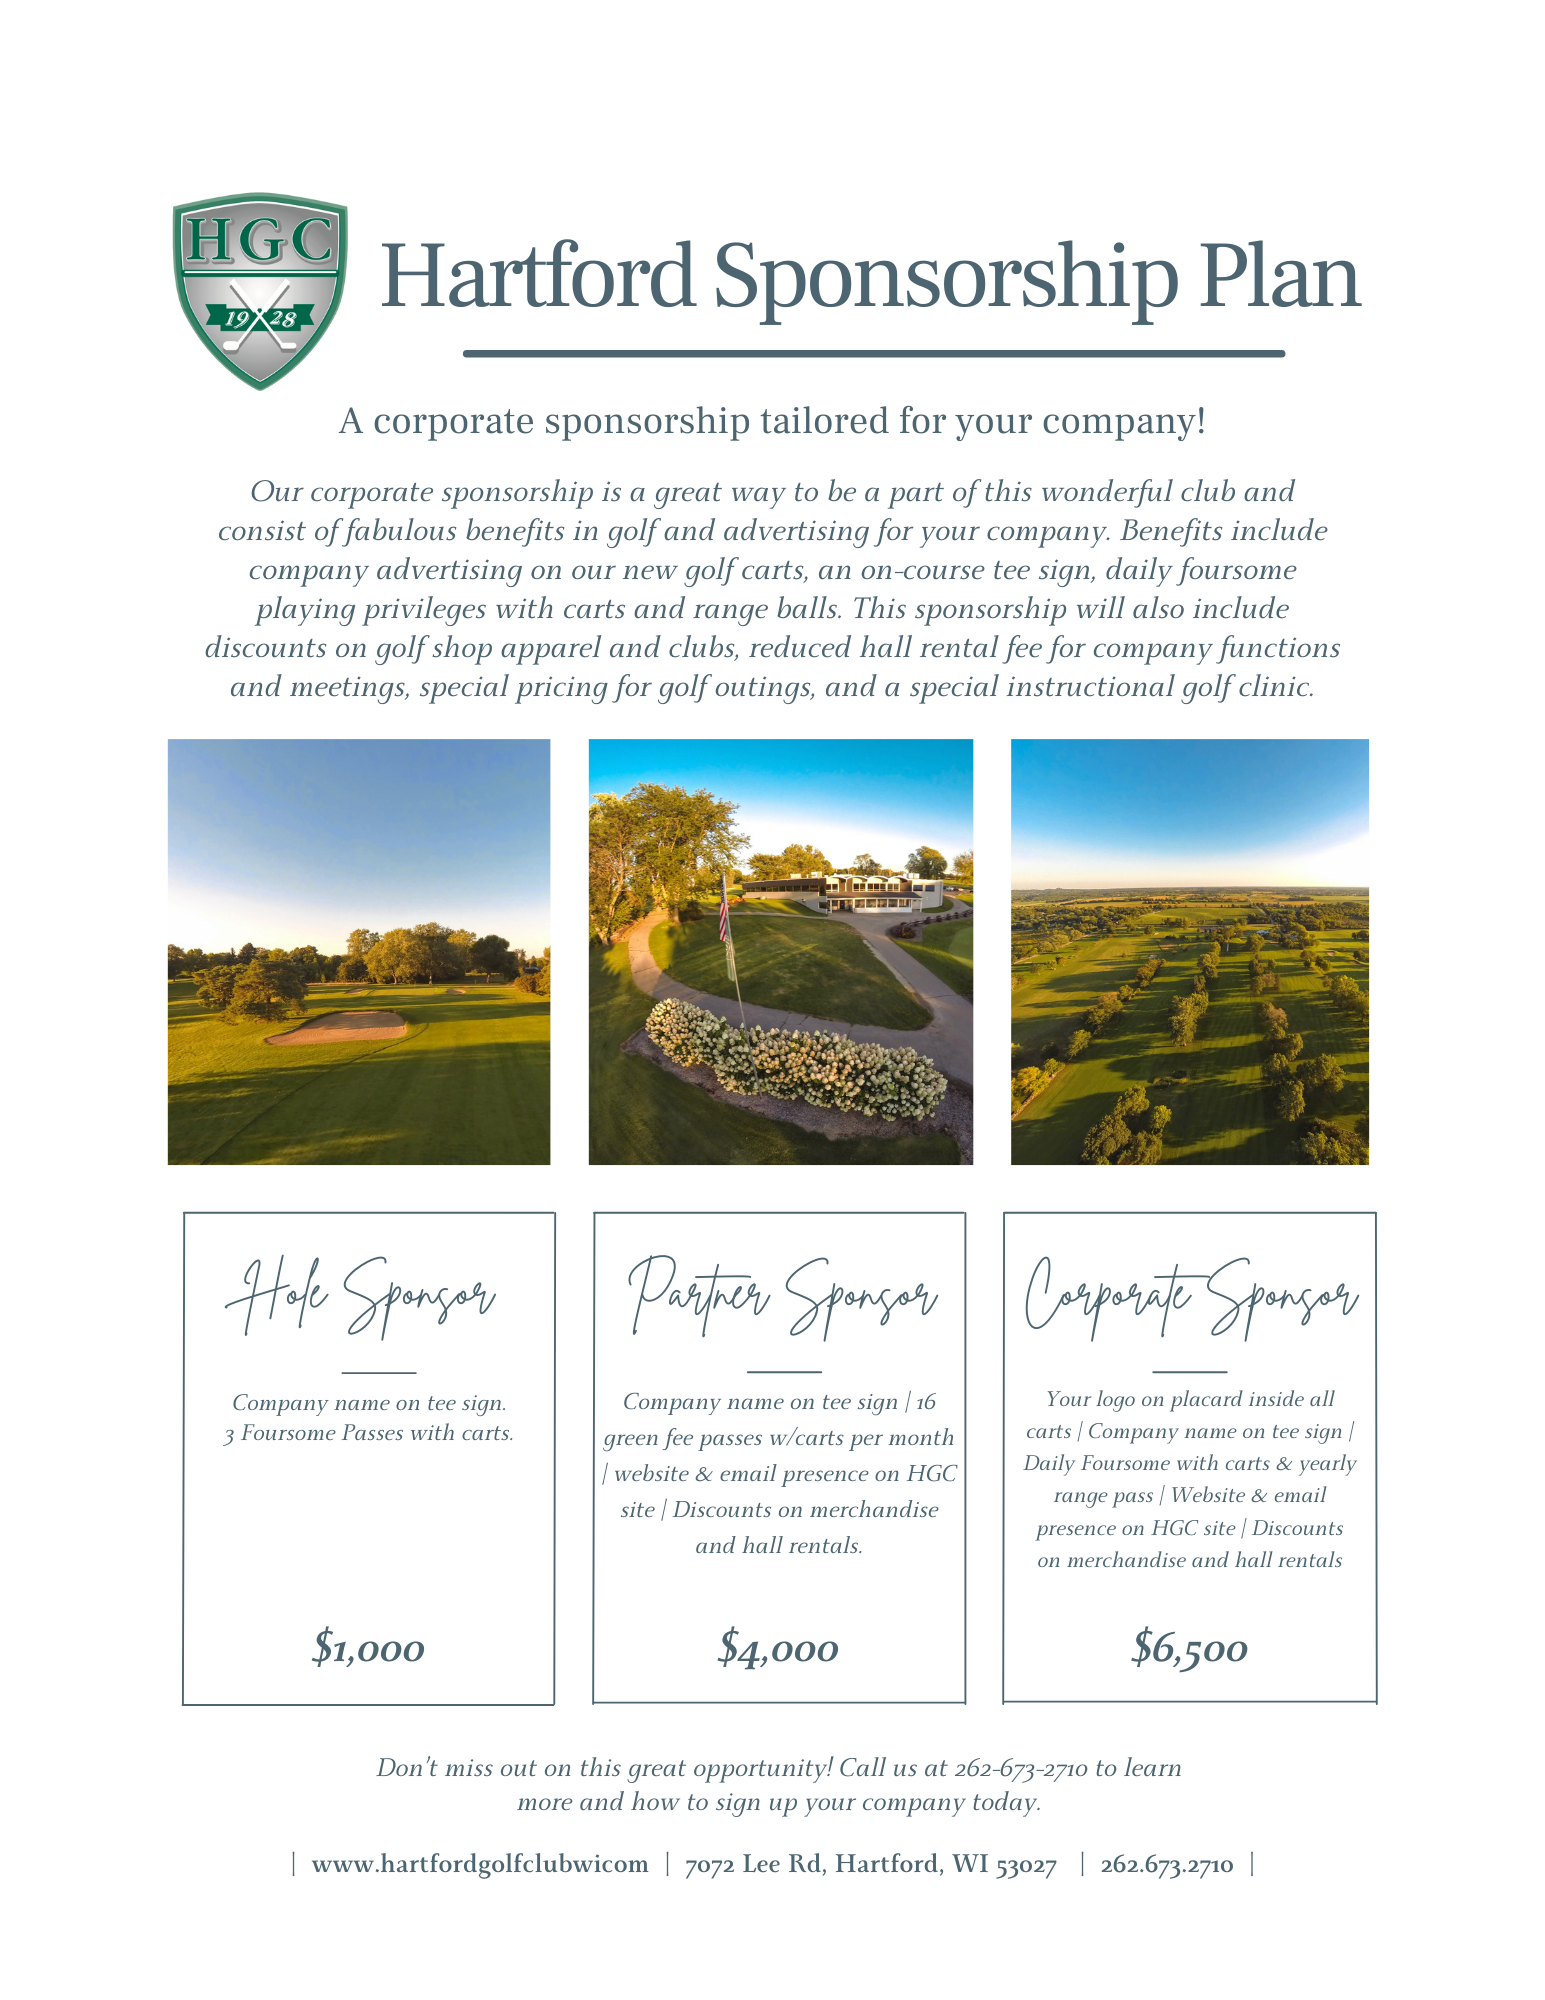 Hartford Sponsorship Plan Flyer 2